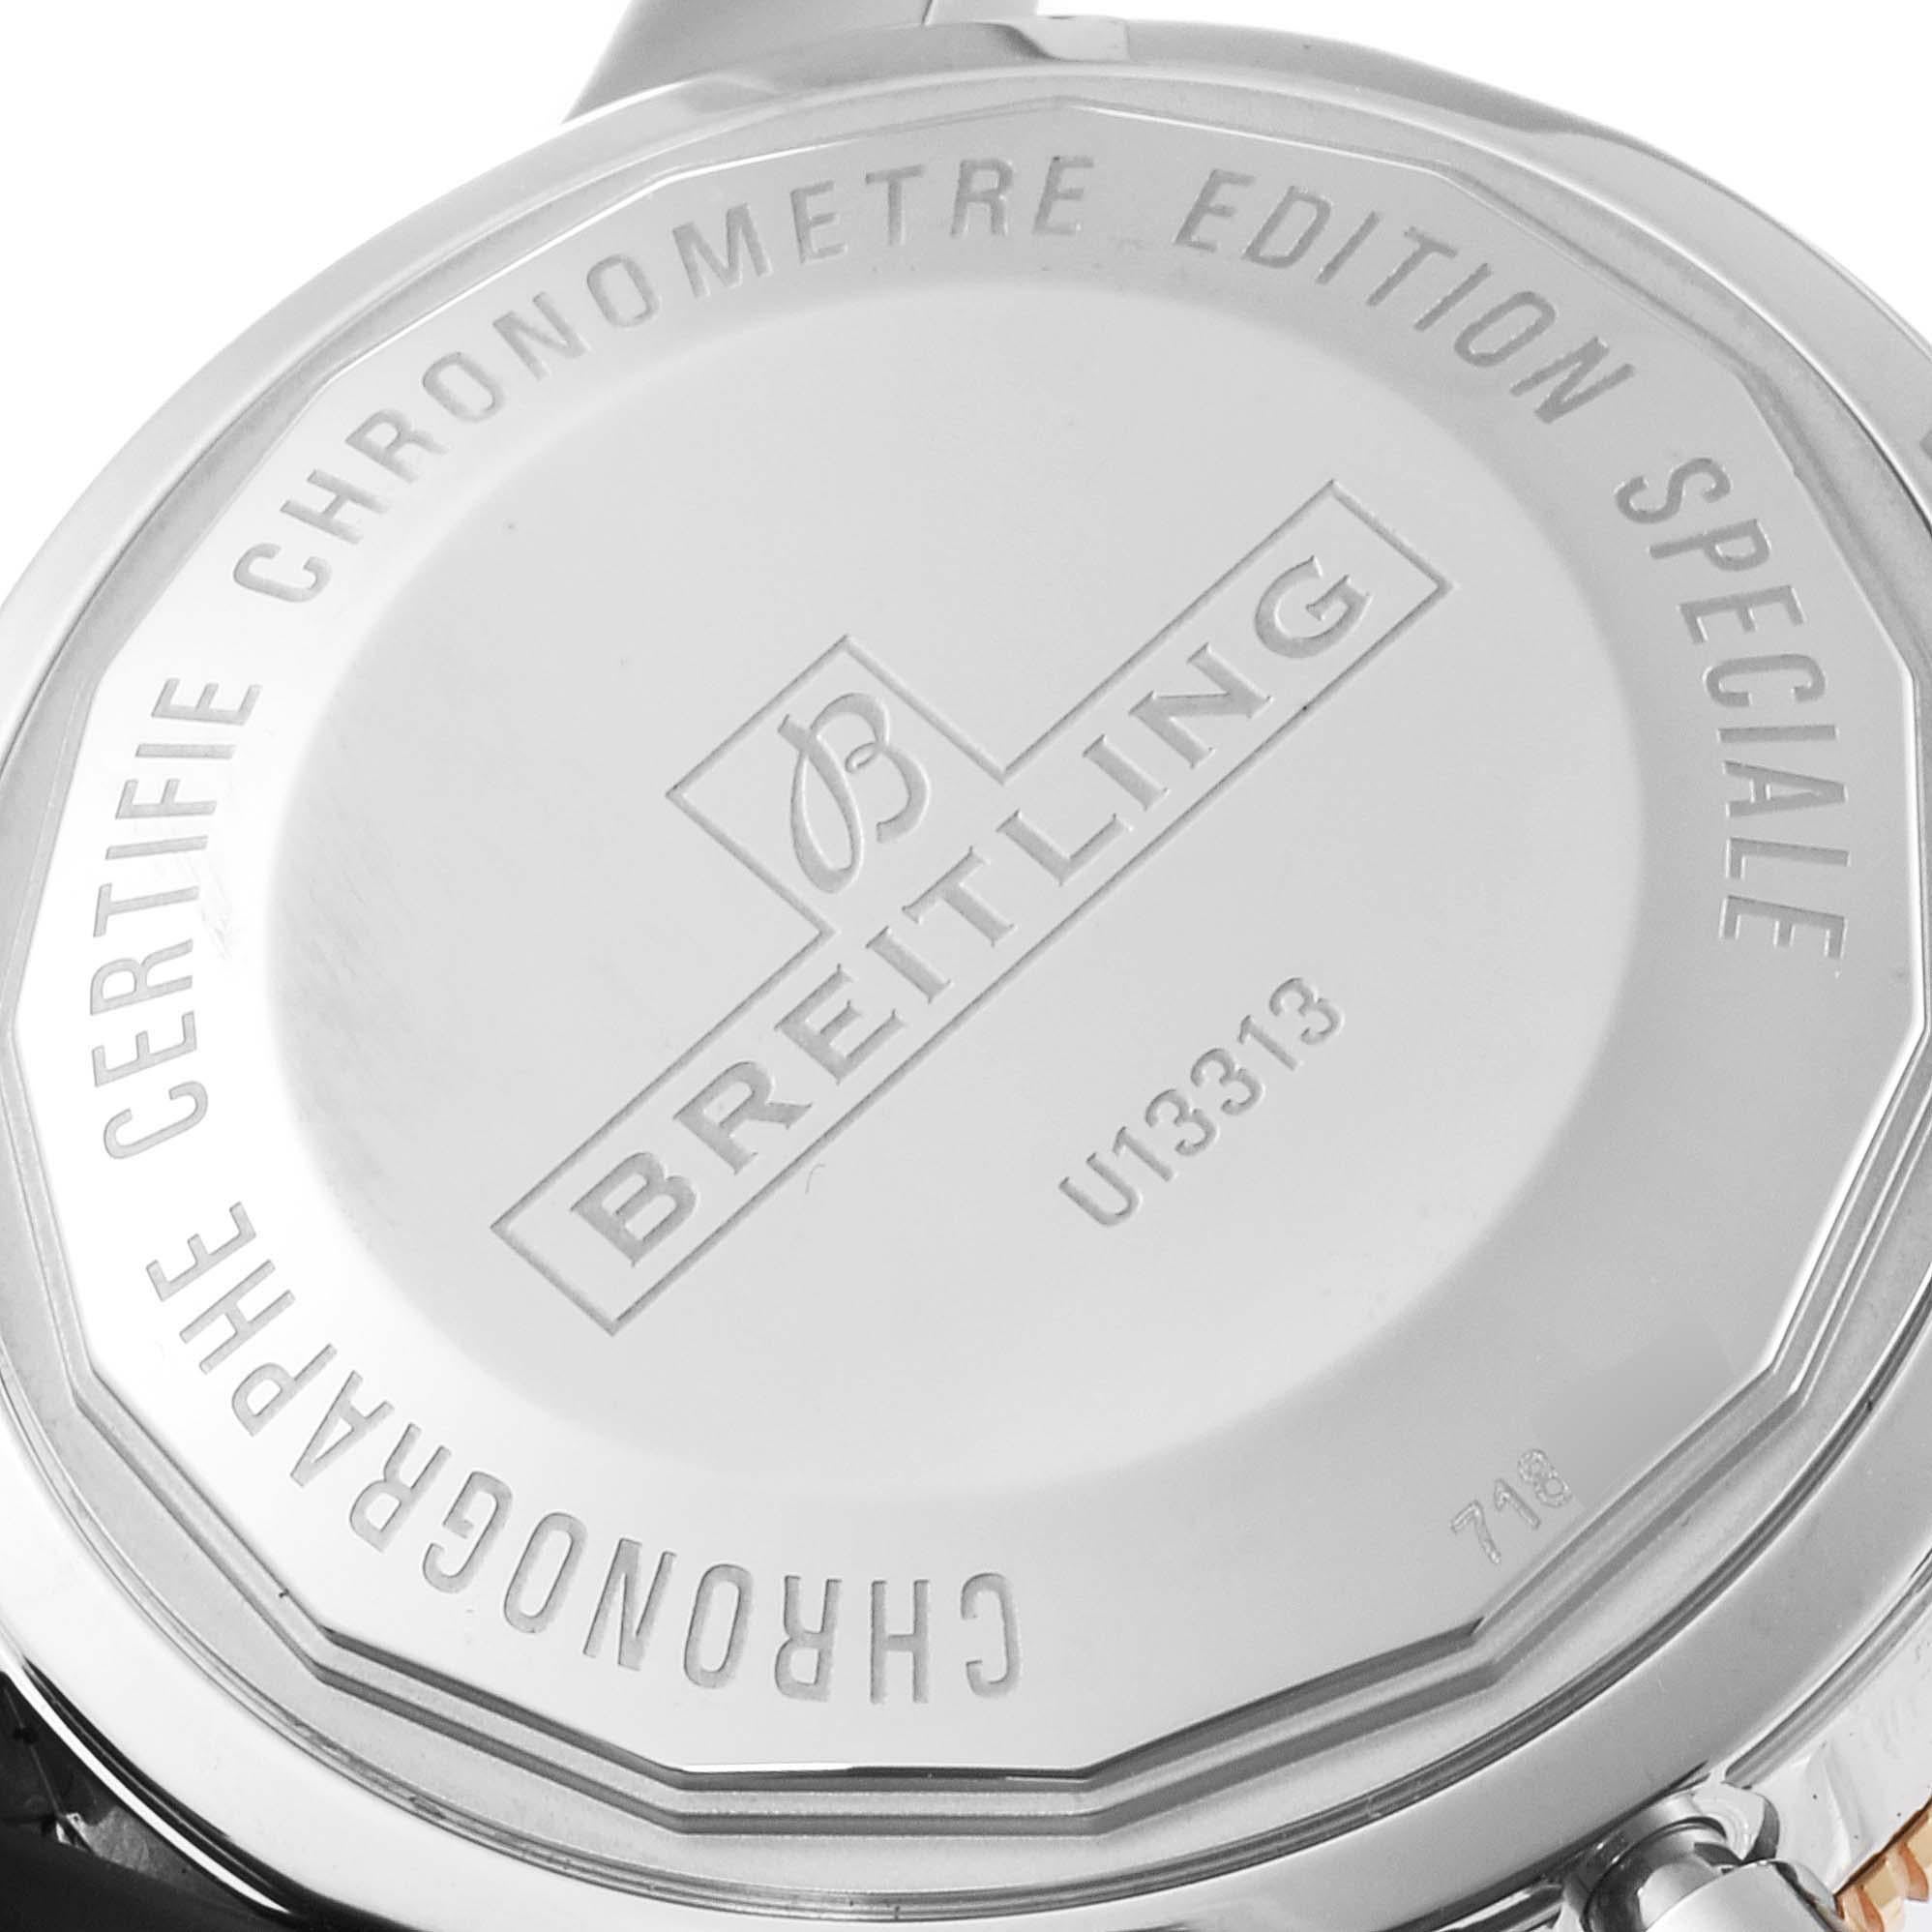 Breitling Superocean Heritage II Stahl-Roségold-Uhr U13313 Box Card im Angebot 3